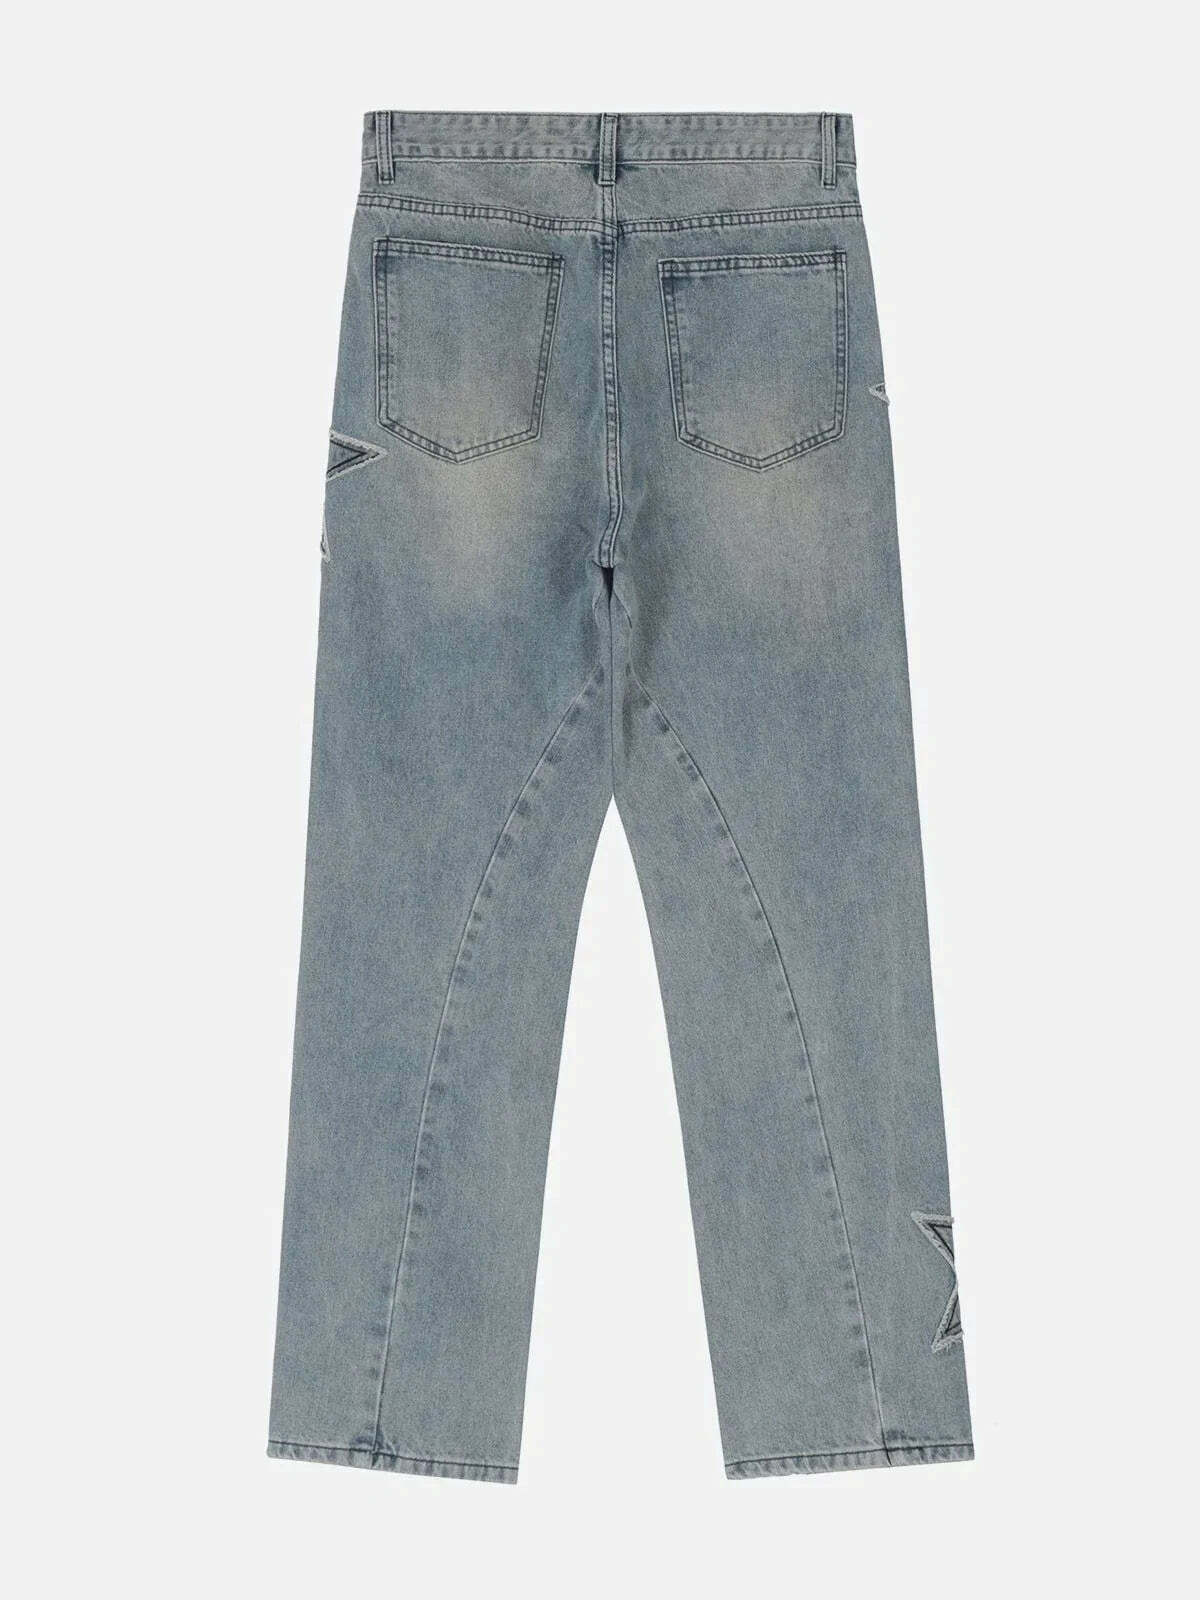 patchwork denim jeans edgy streetwear essential 5284